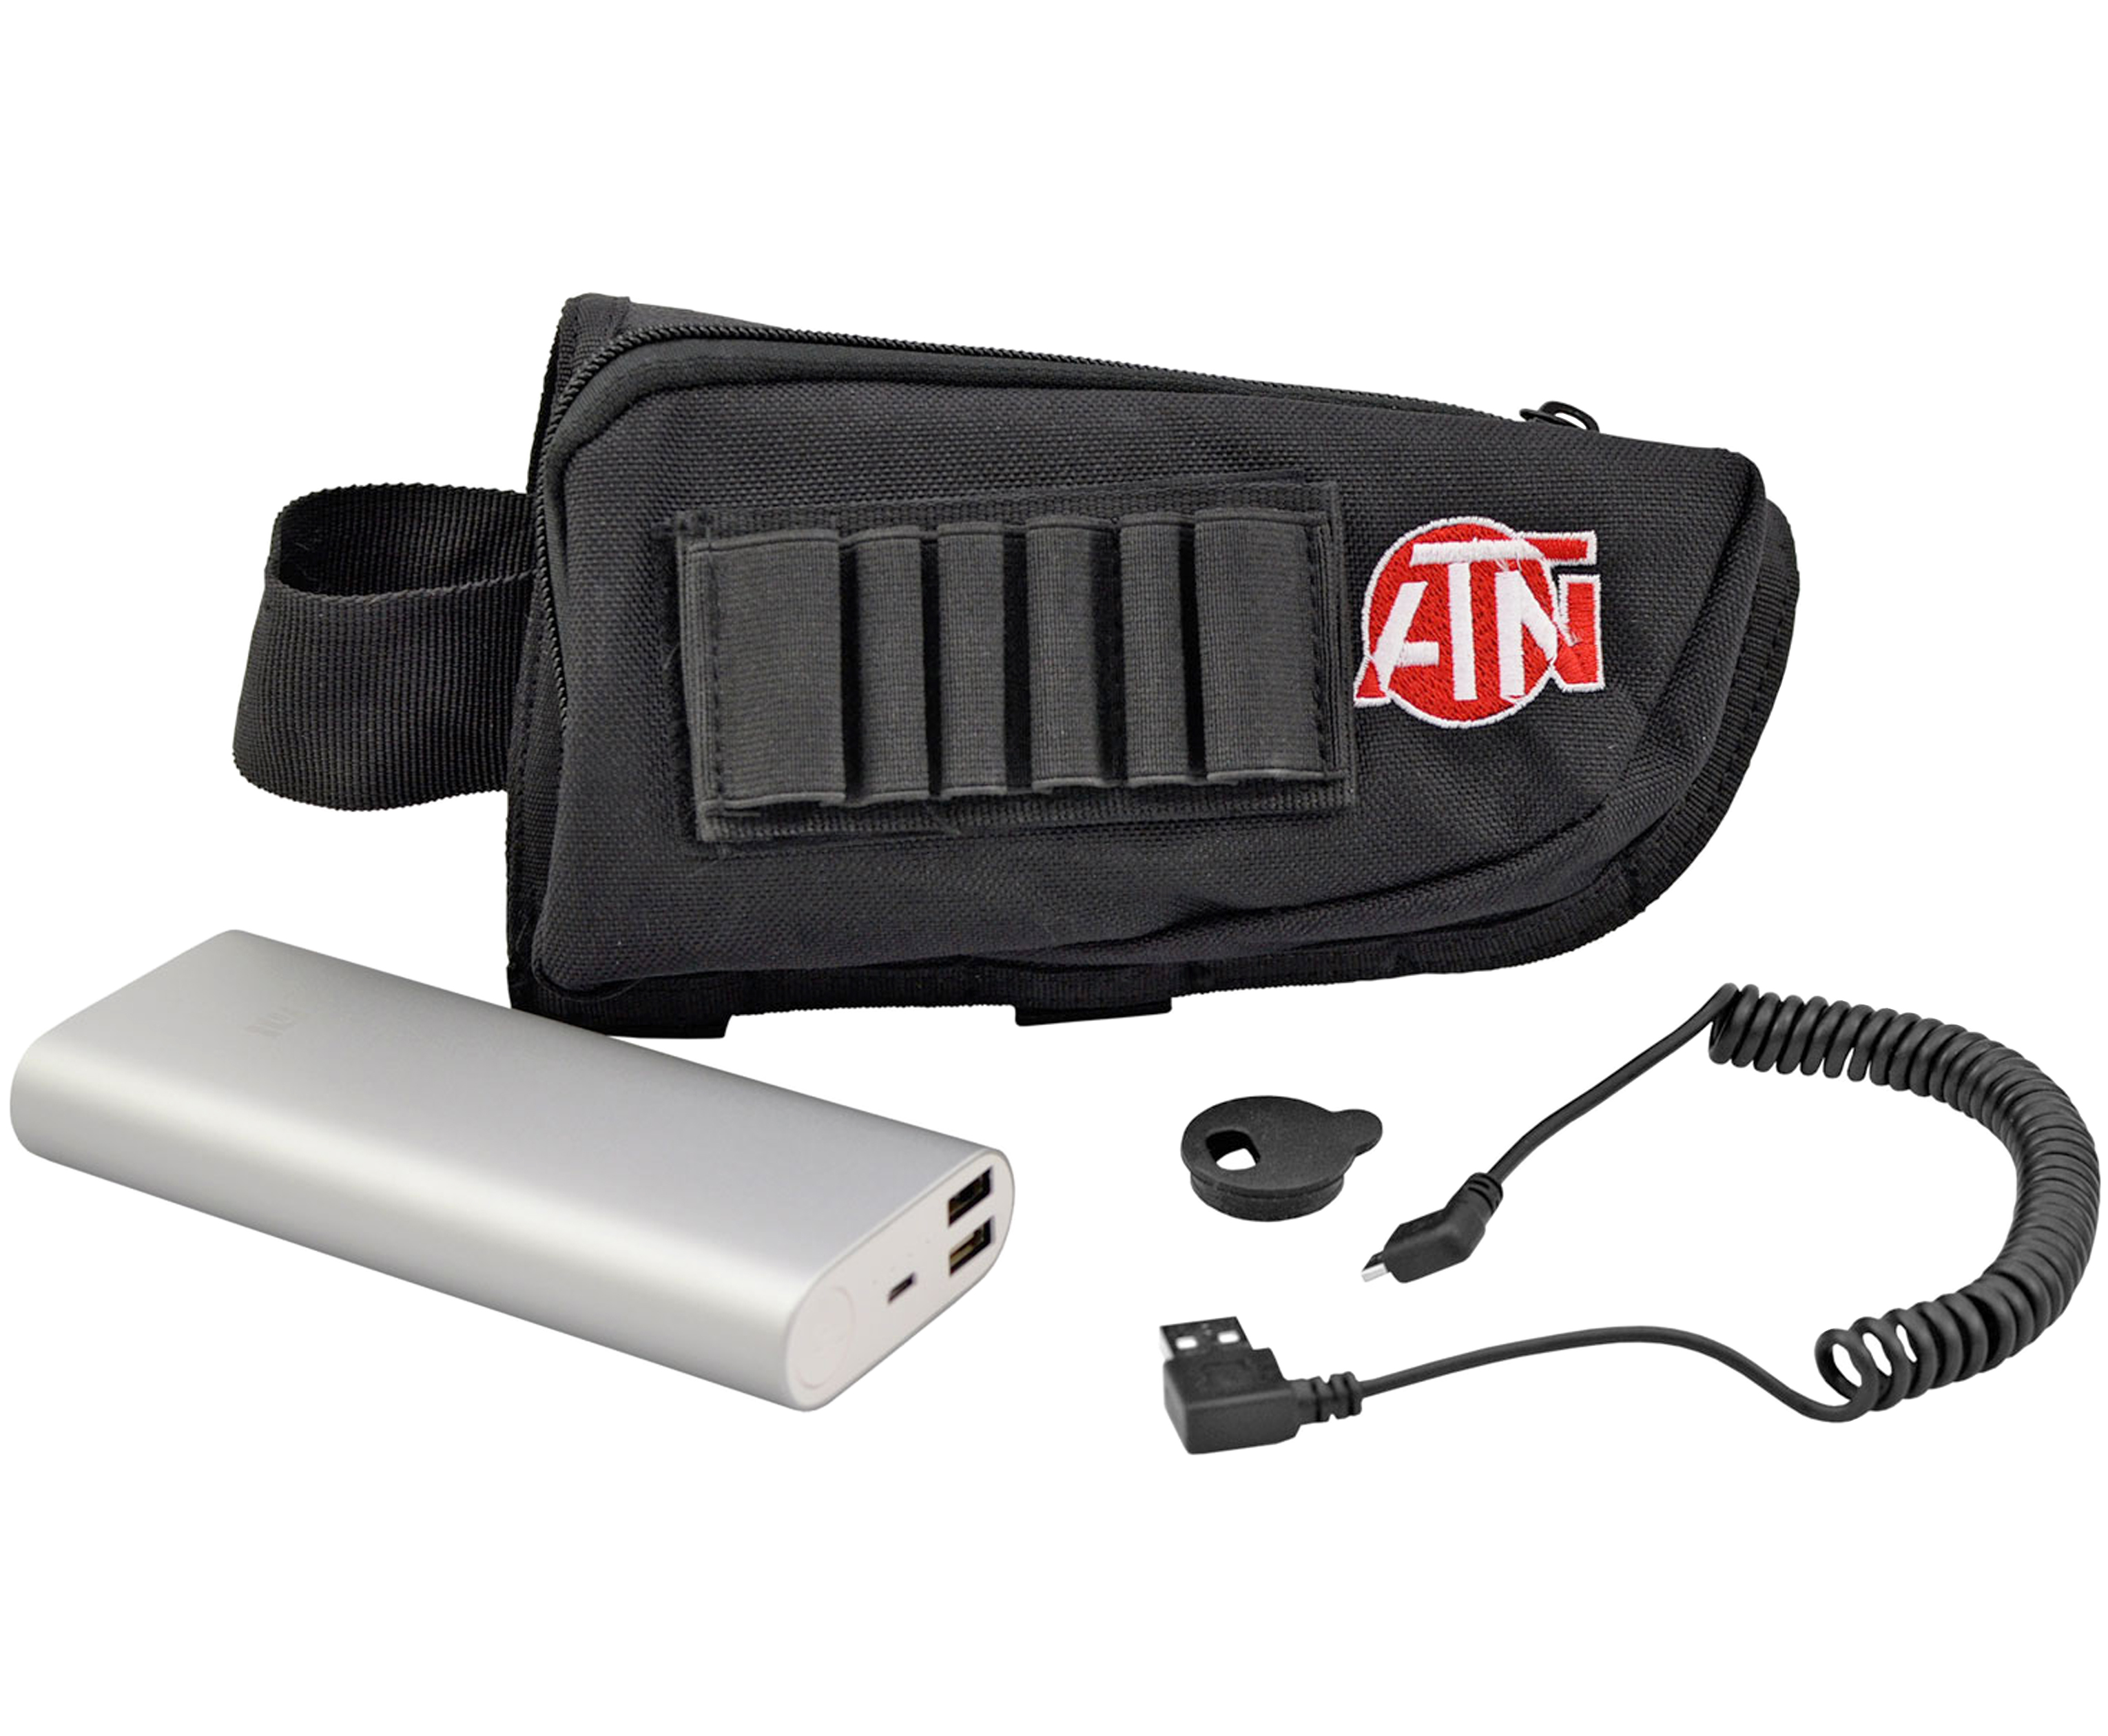 Аккумулятор выносной ATN 20000 мАч (USB, чехол на приклад)